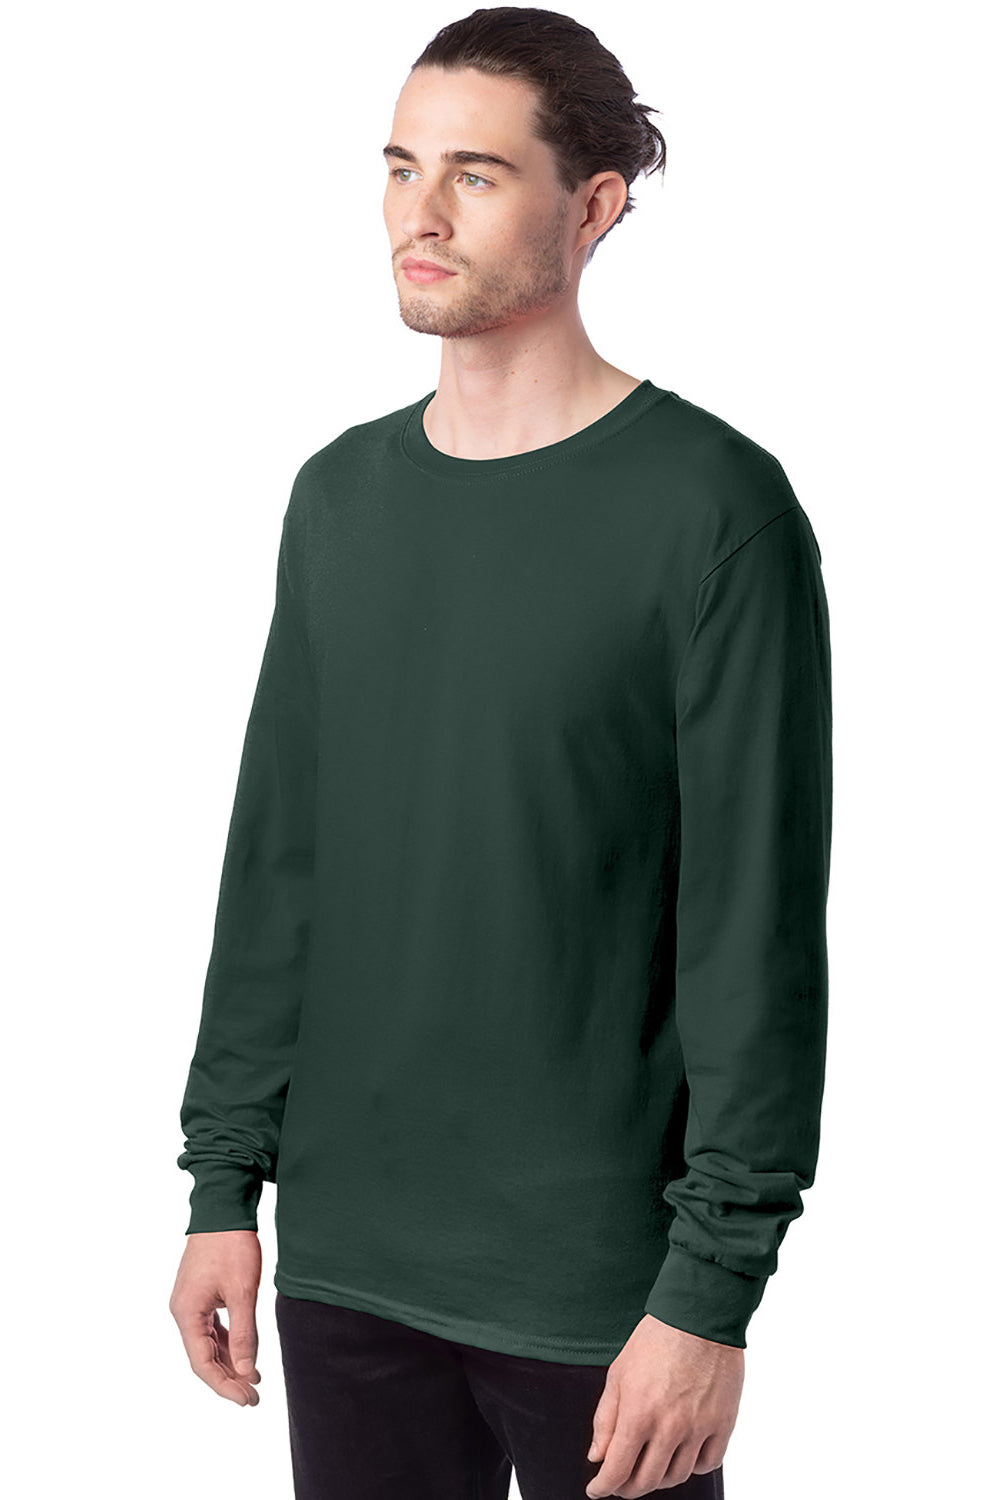 Hanes 5286 Mens ComfortSoft Long Sleeve Crewneck T-Shirt Athletic Dark Green 3Q